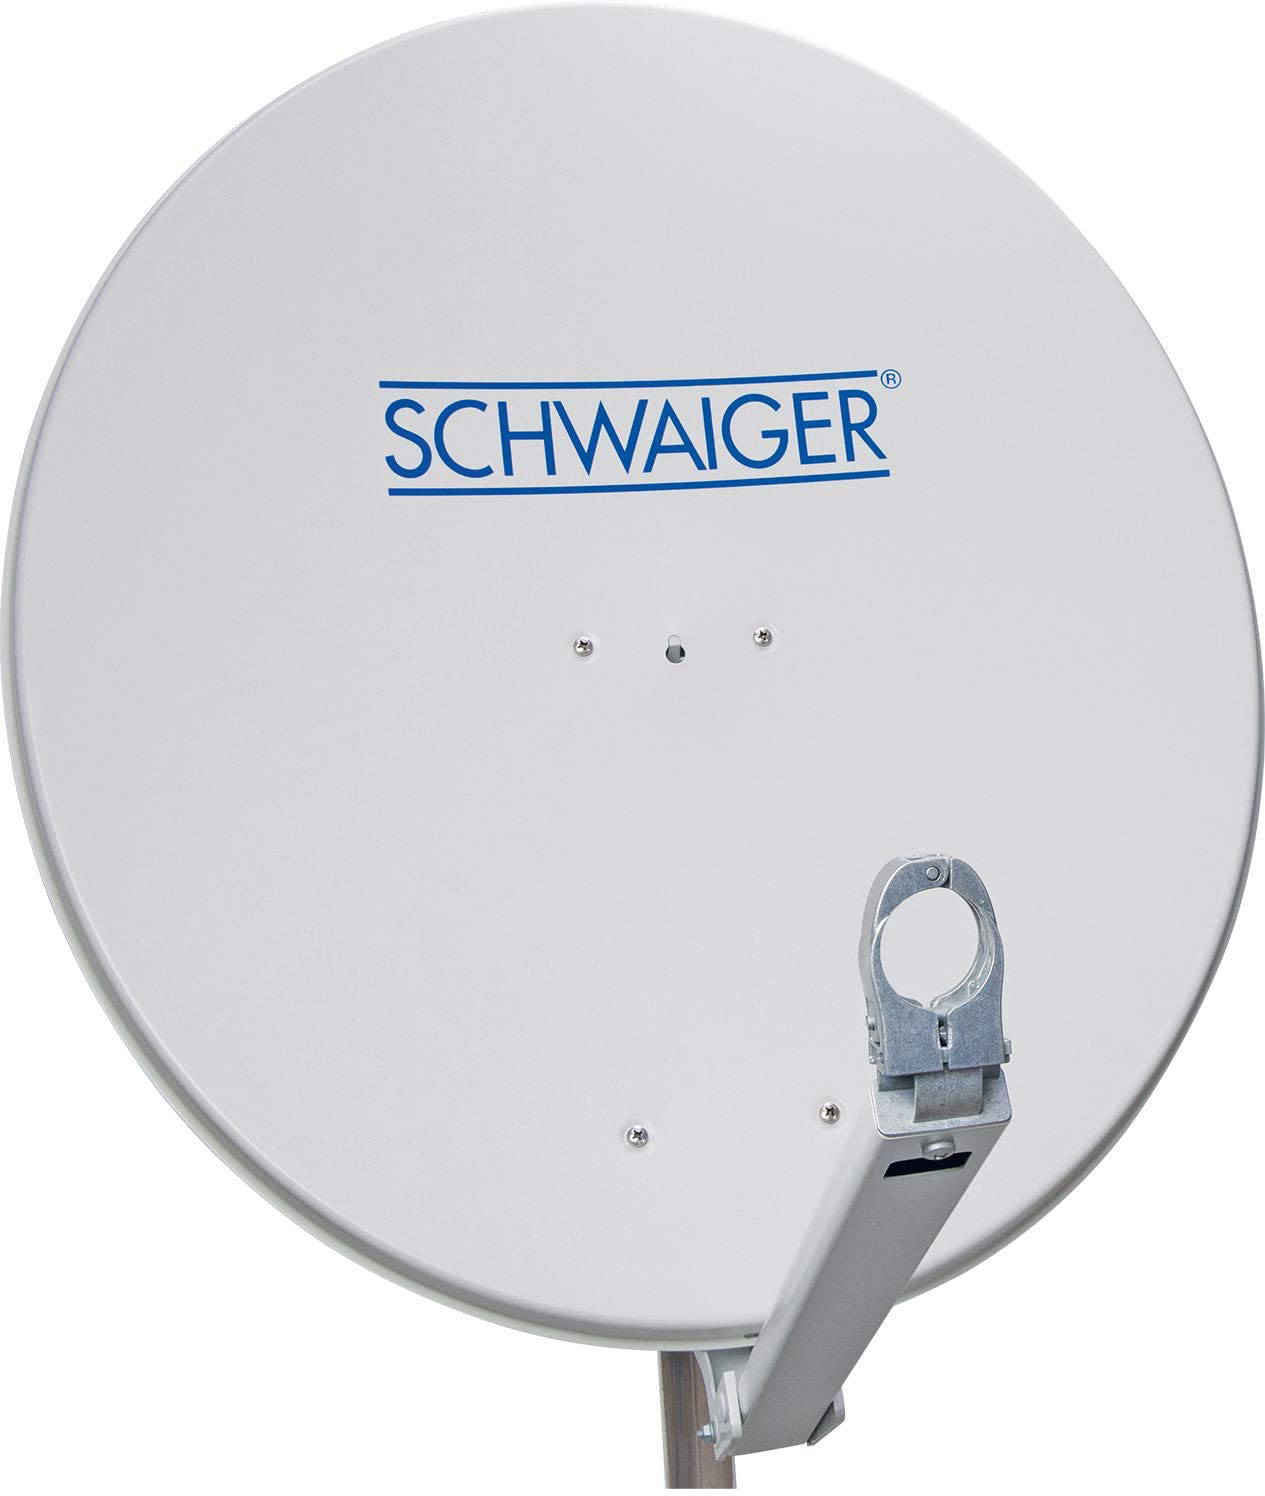 SCHWAIGER -SPI710.0- Aluminium cm) Antenne Offset (75